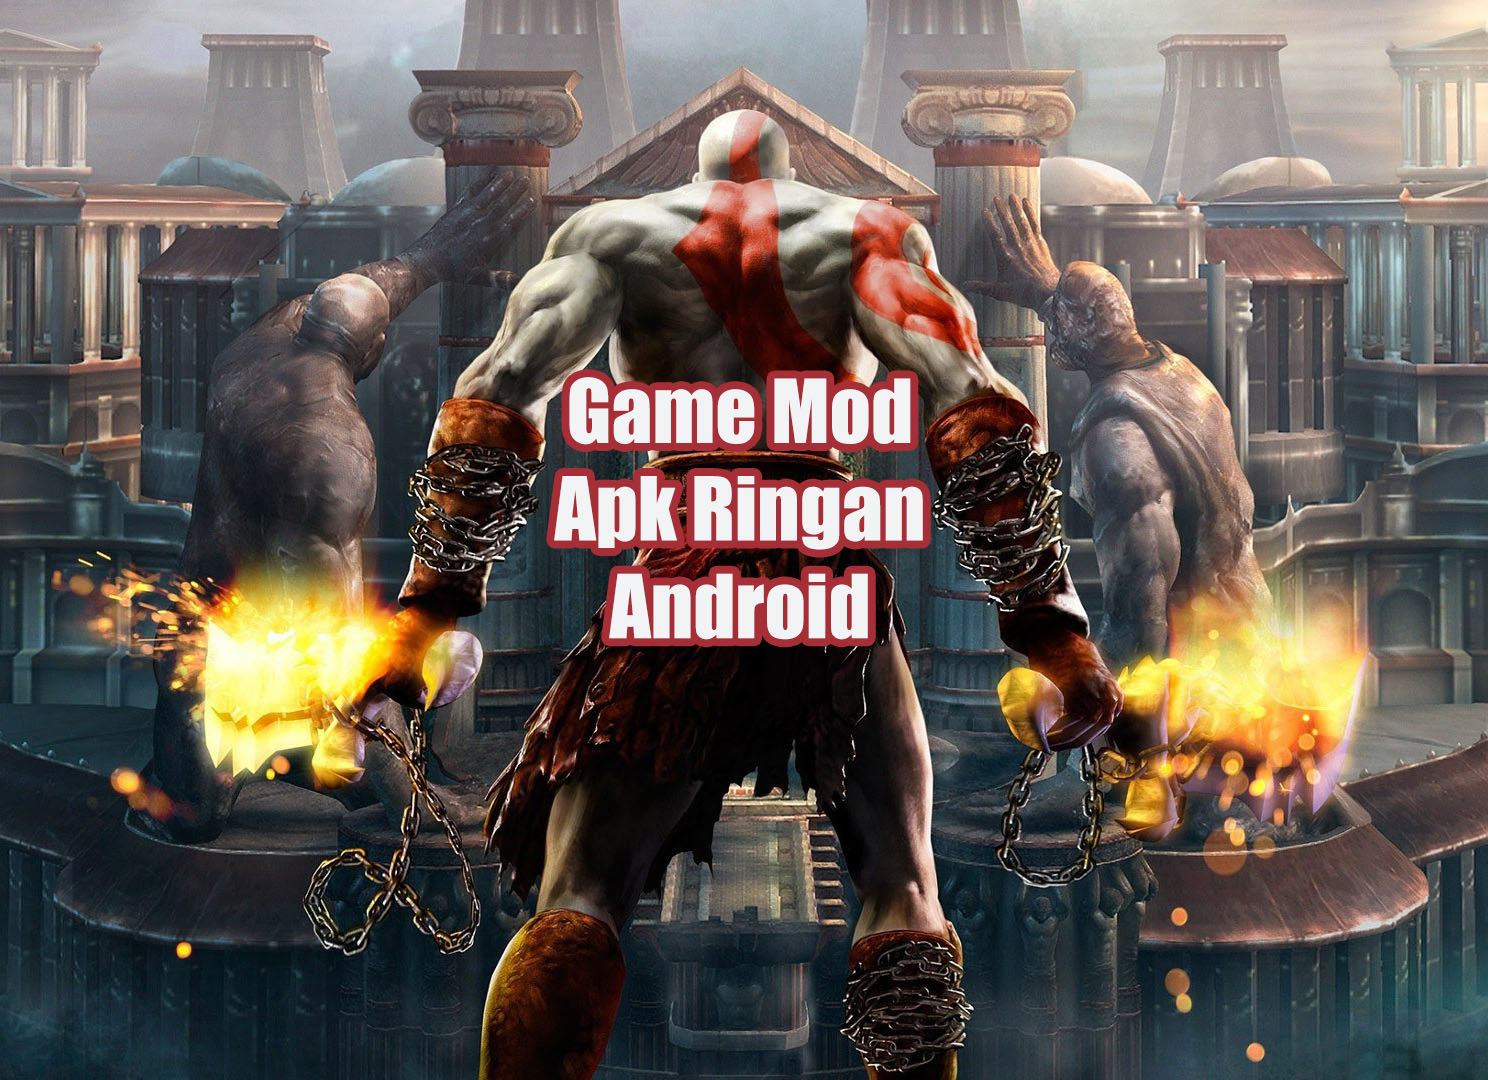 Download Game Mod Apk Ringan Seru Di Android (Offline/Online